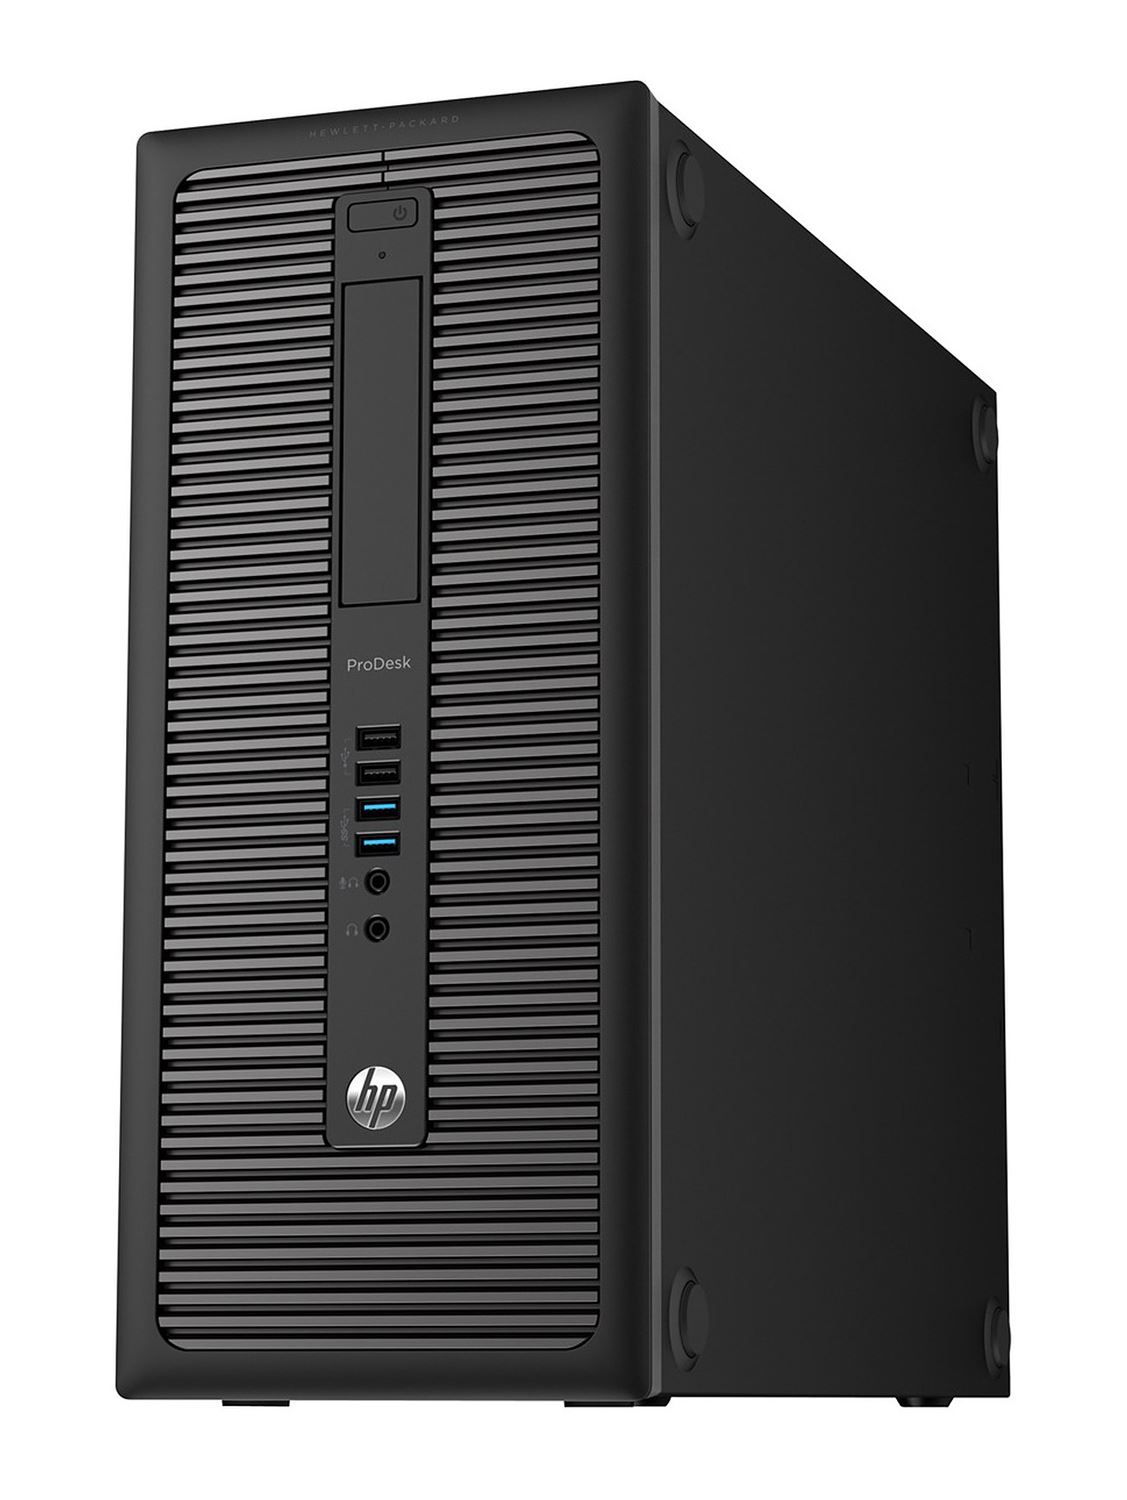 HP PC ProDesk 600 G1 TWR, i5-4570, 4/500GB, DVD, REF SQR -κωδικός PCM-2005-SQR